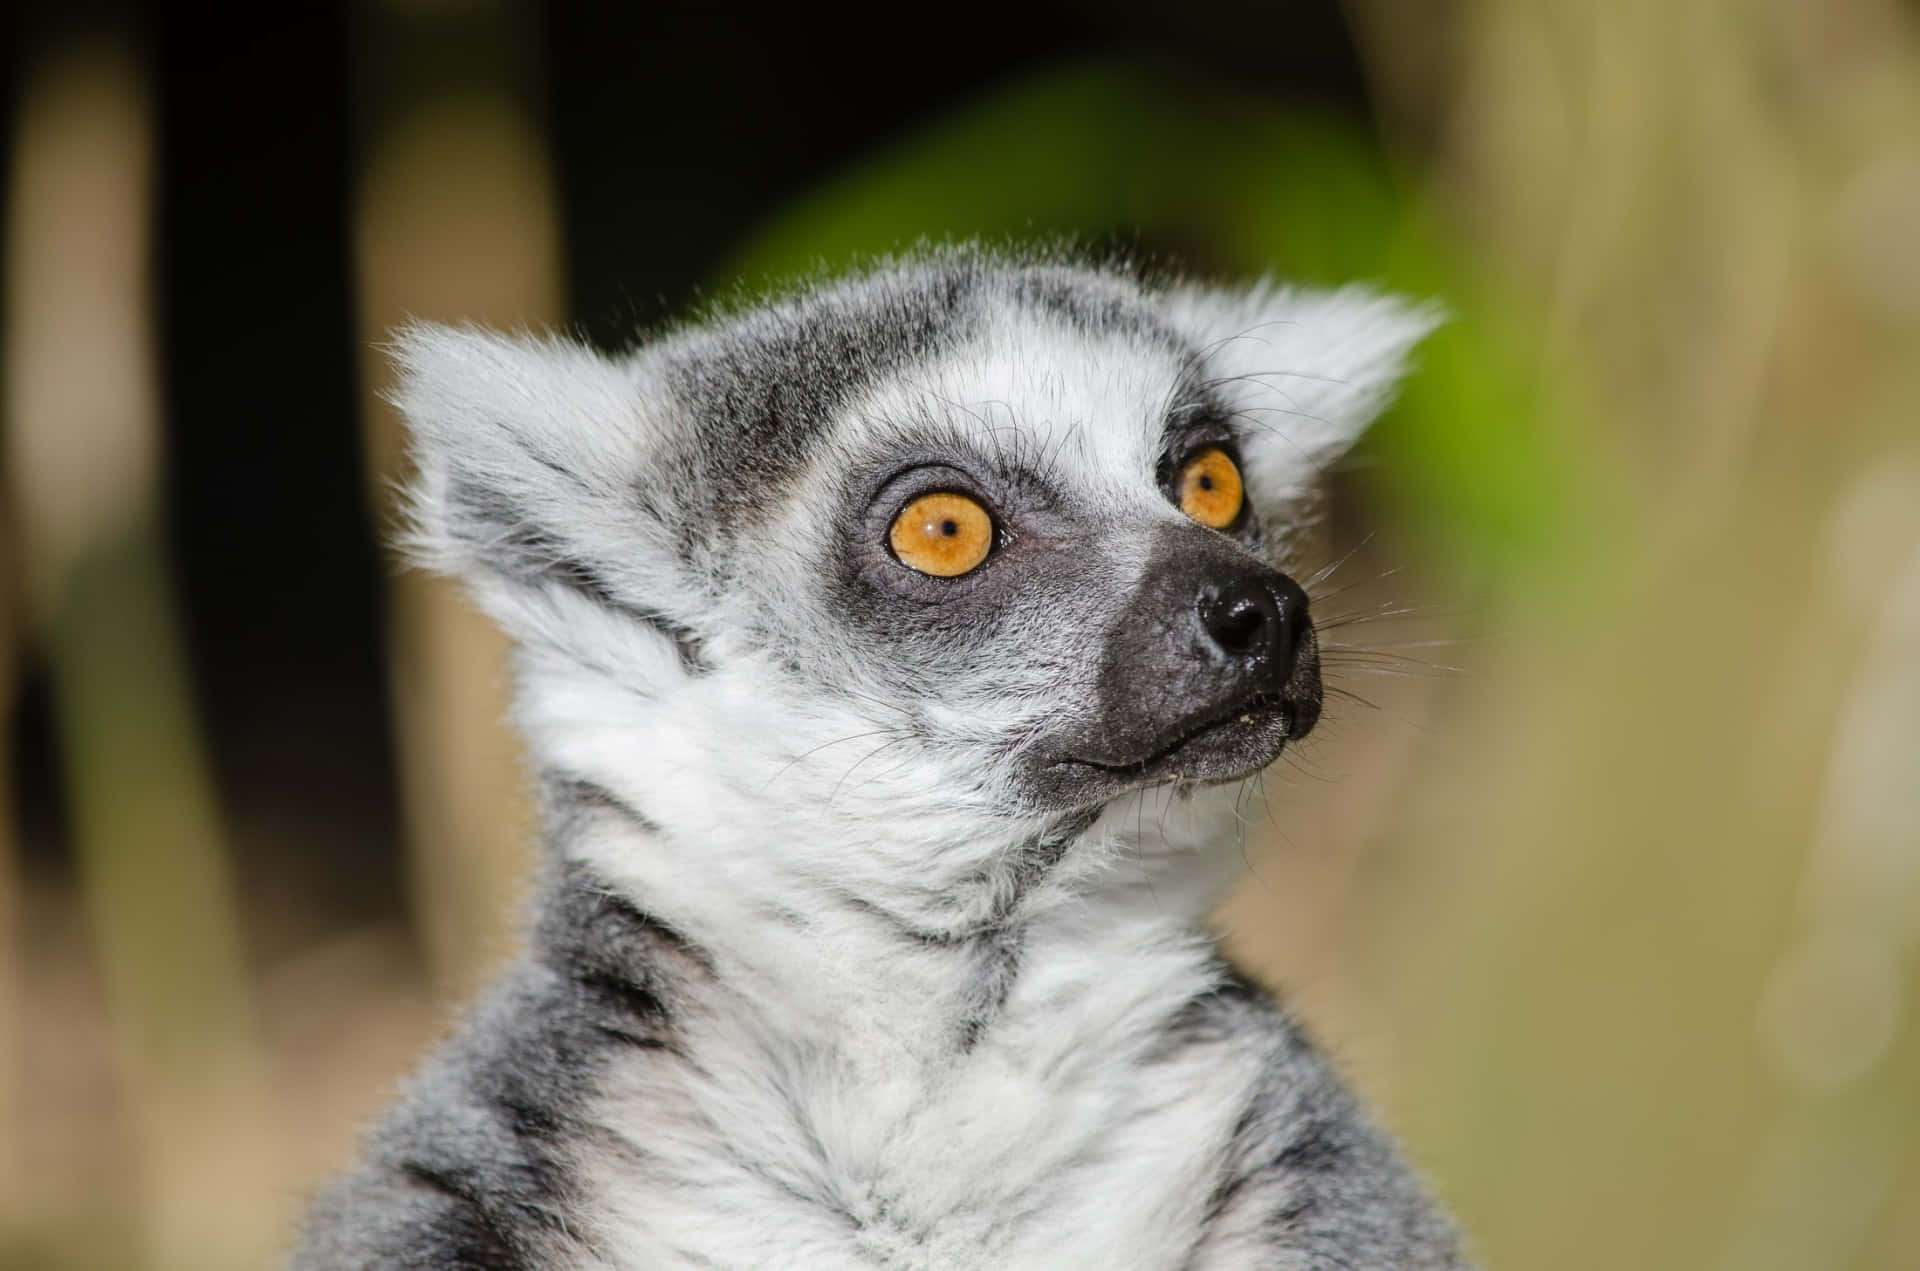 Captivating Lemur In Its Natural Habitat Wallpaper